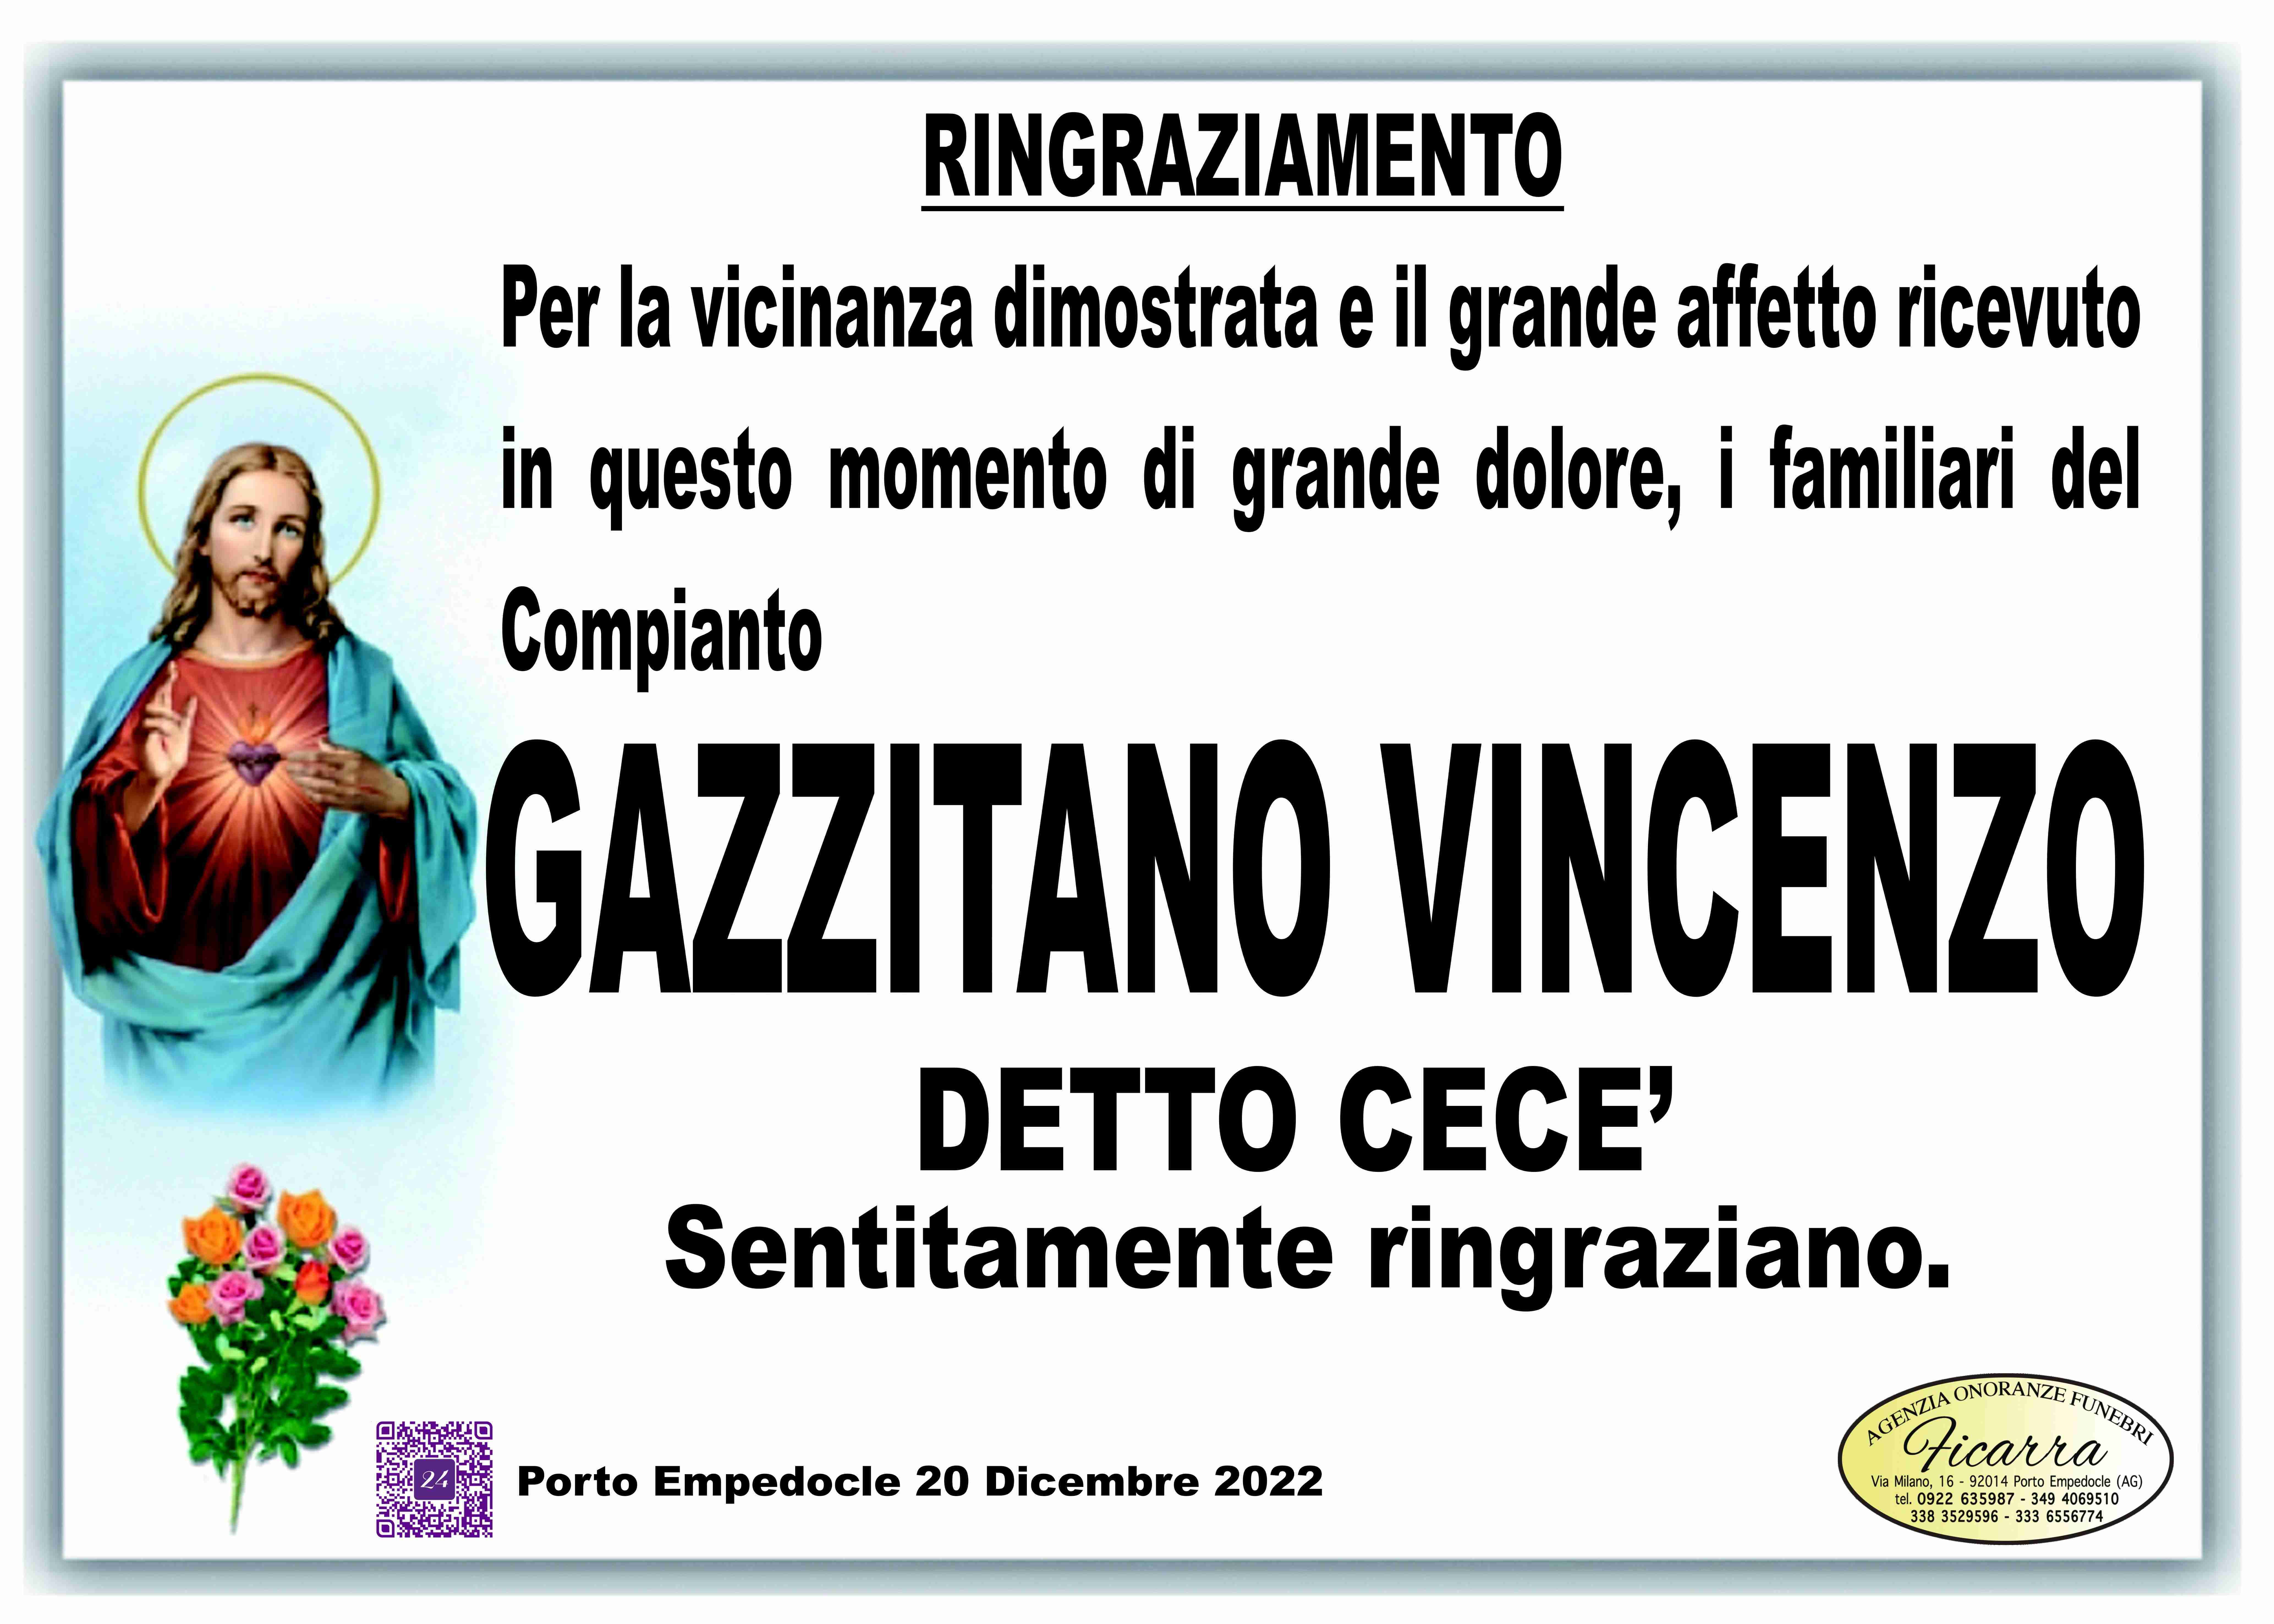 Vincenzo Gazzitano